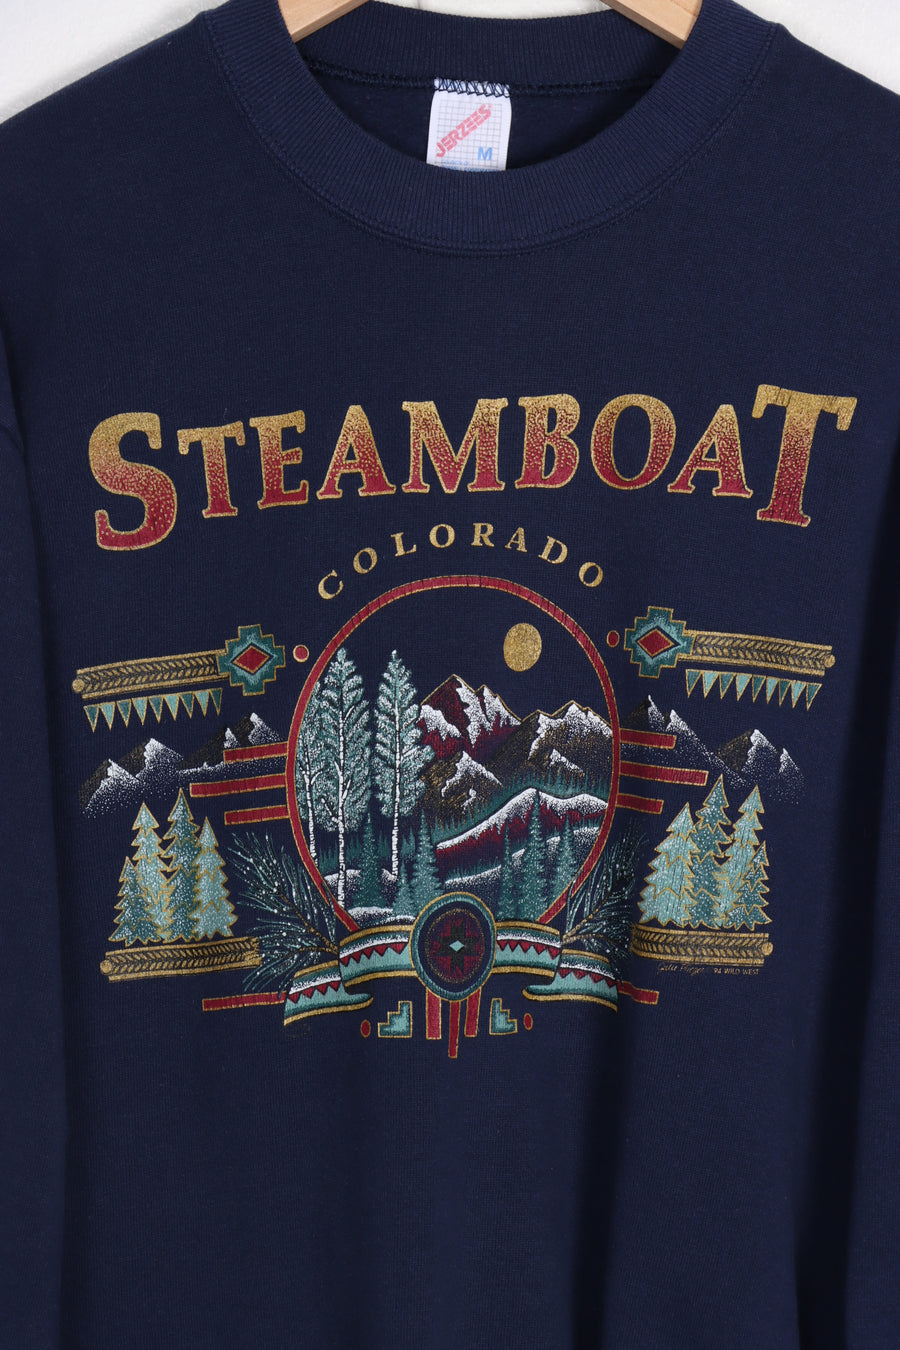 Steamboat Colorado 1994 Nature Sweatshirt USA Made (M)